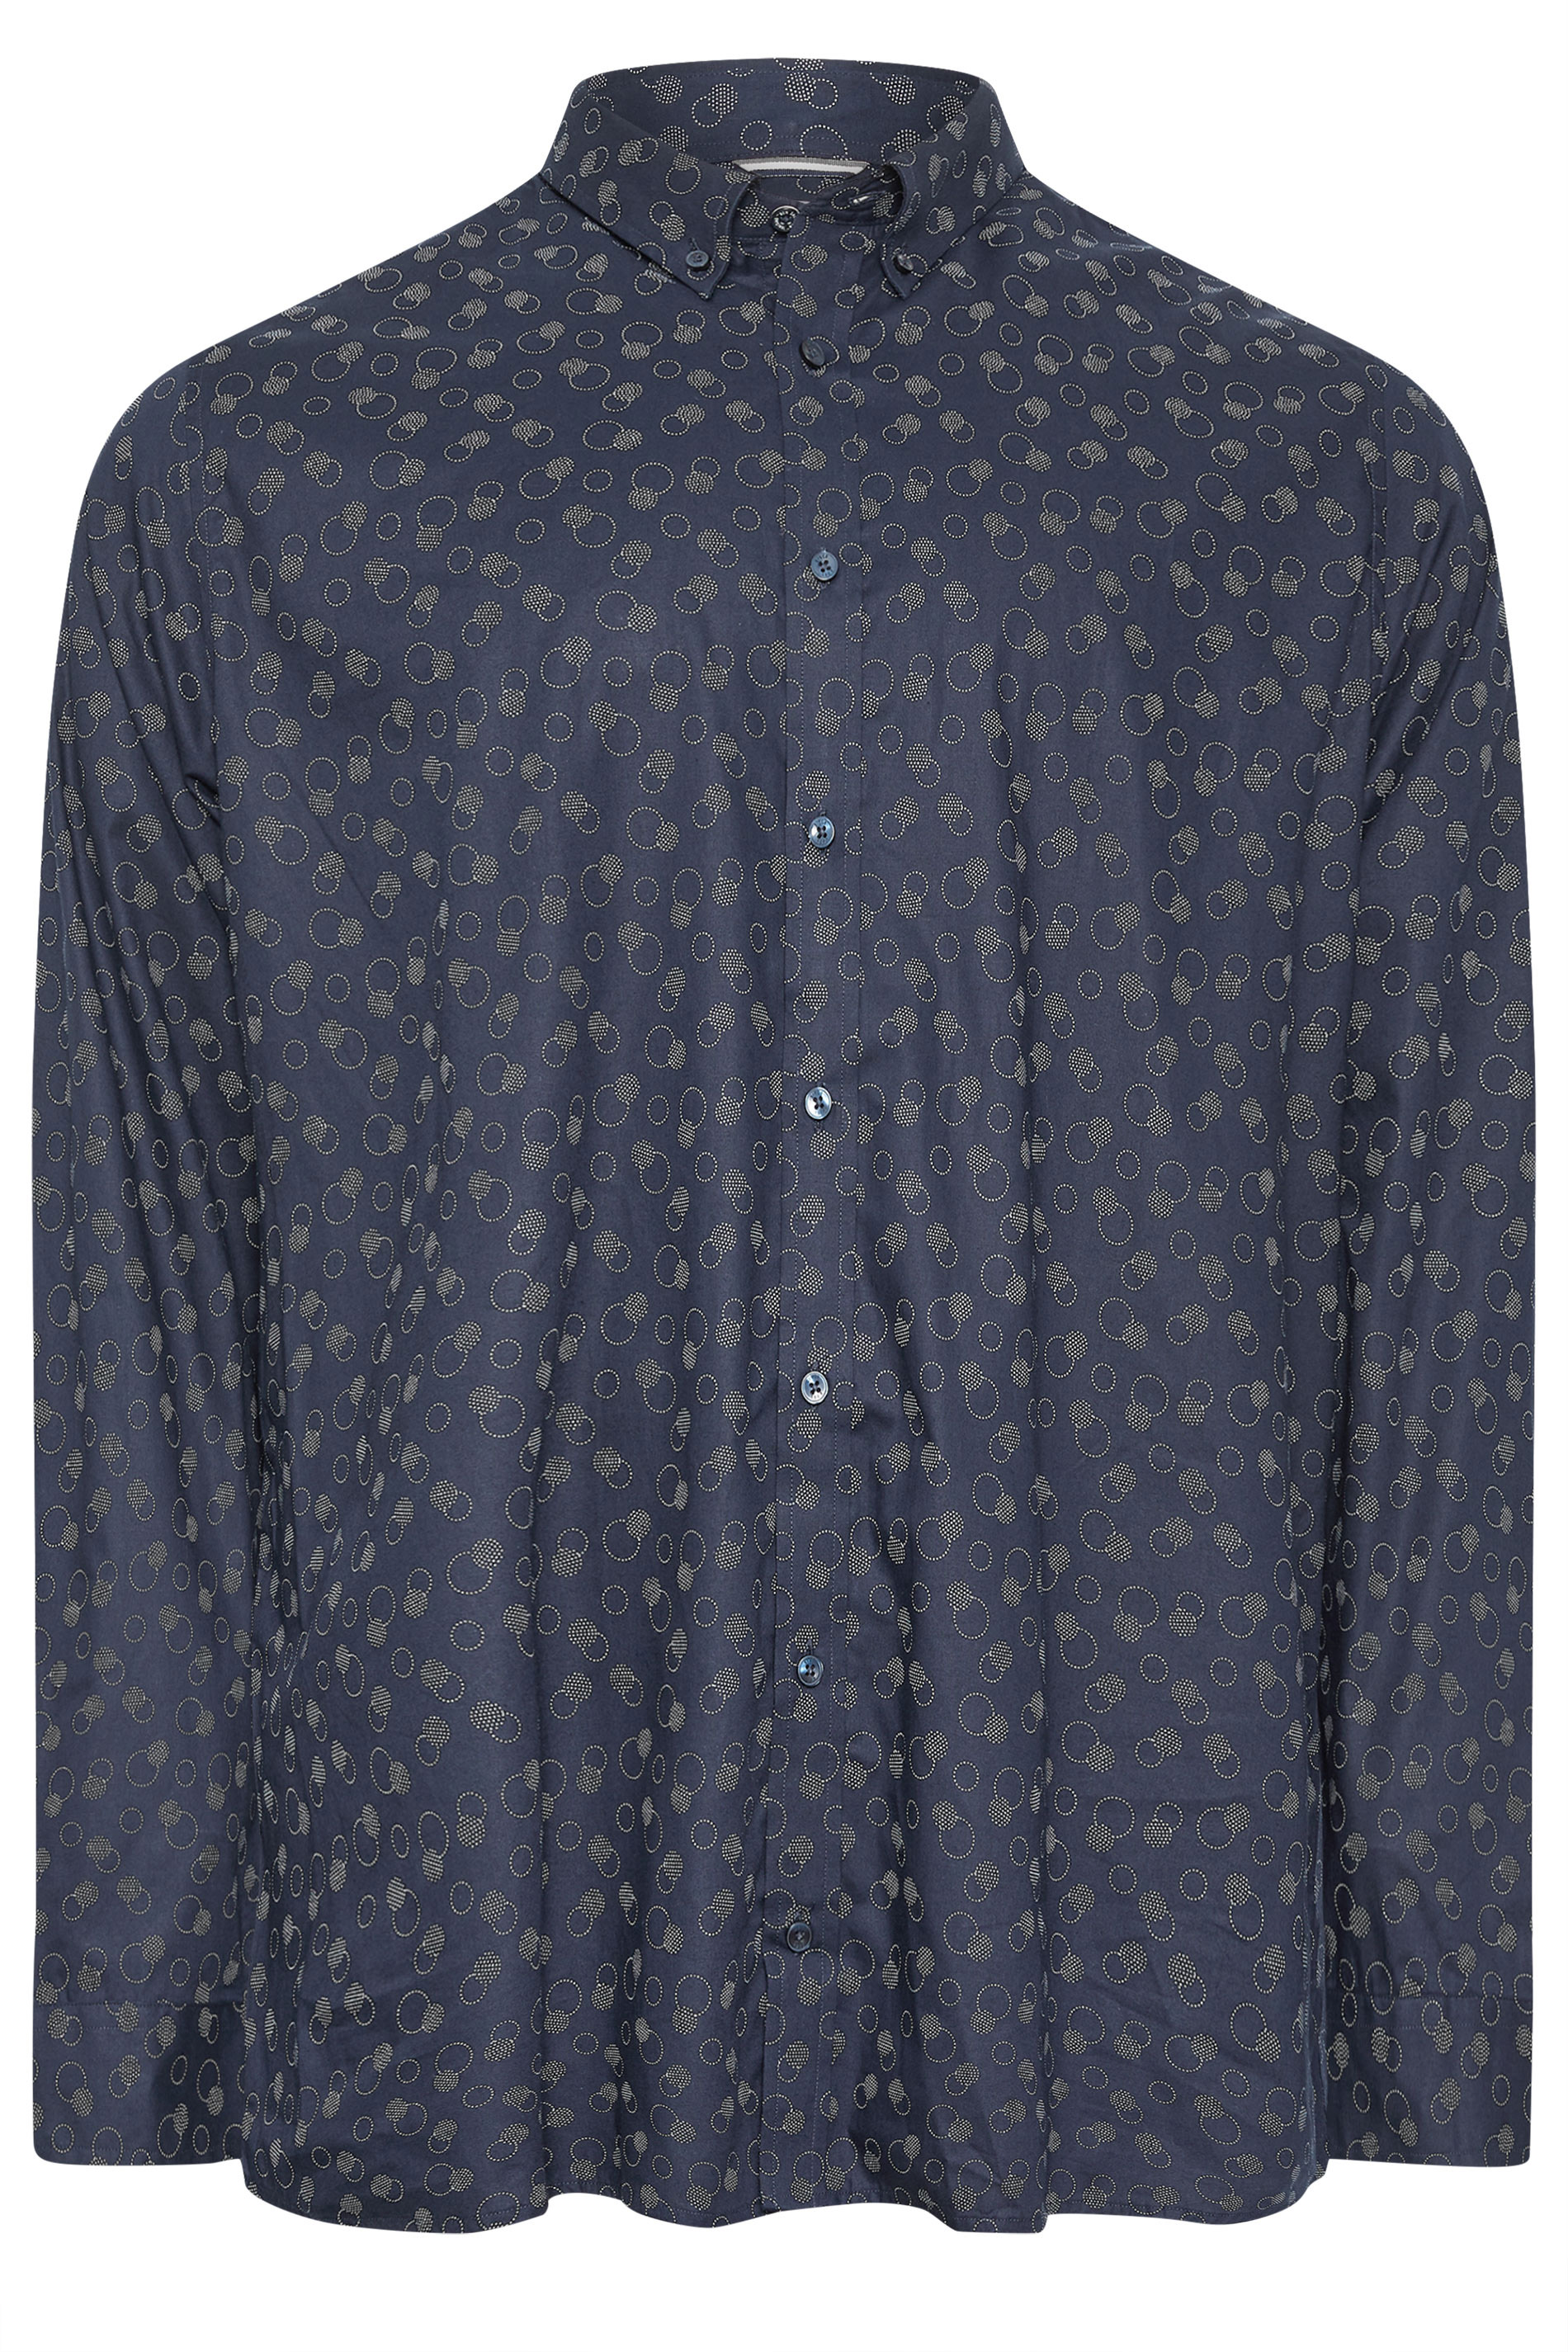 Ben Sherman Navy Blue Stipple Print Long Sleeve Shirt | BadRhino